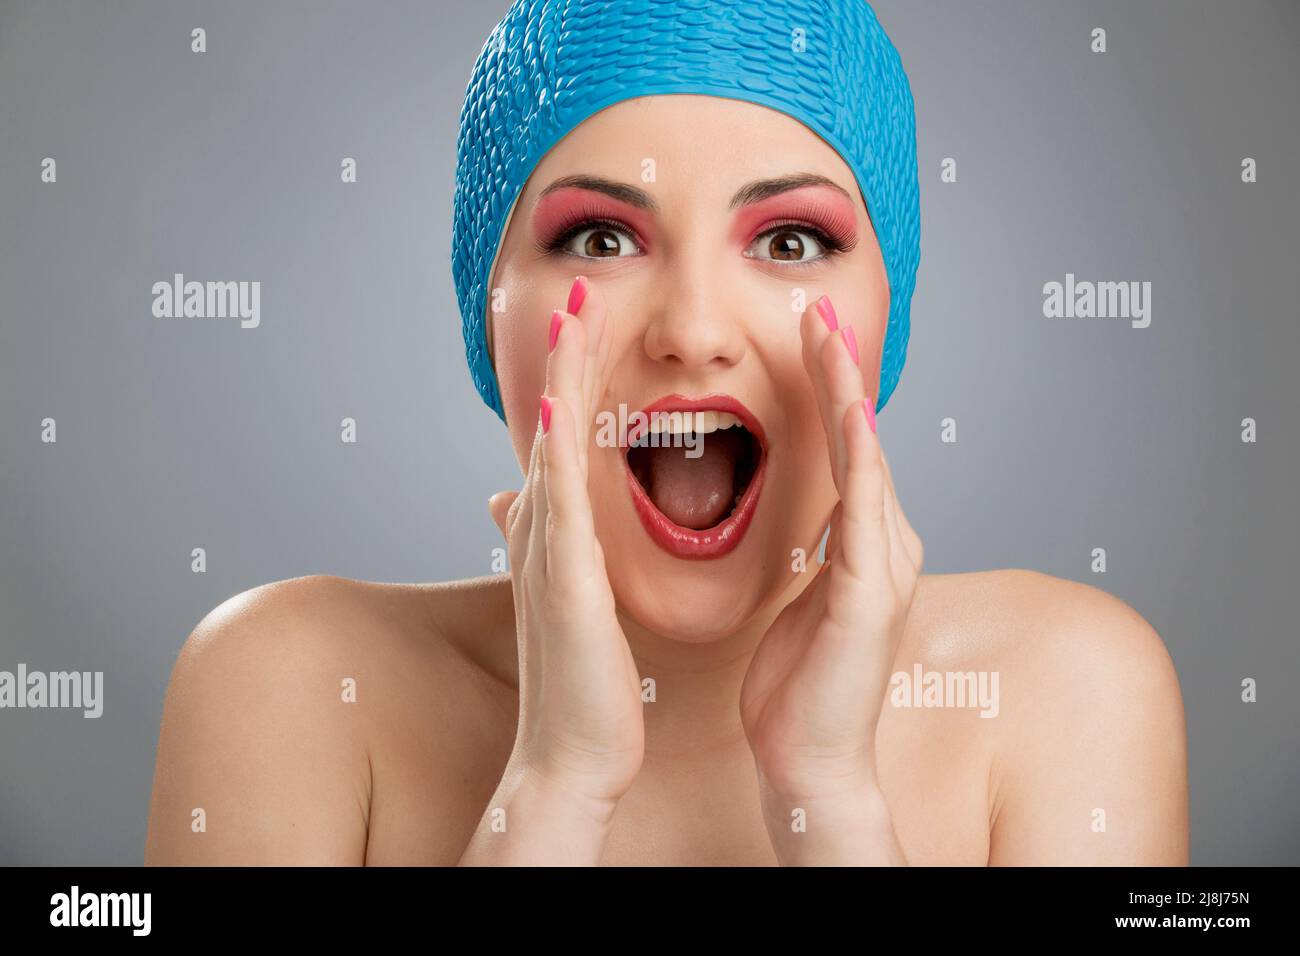 Funny portrait of a beautiful woman wearing a swim cap Stock Photo